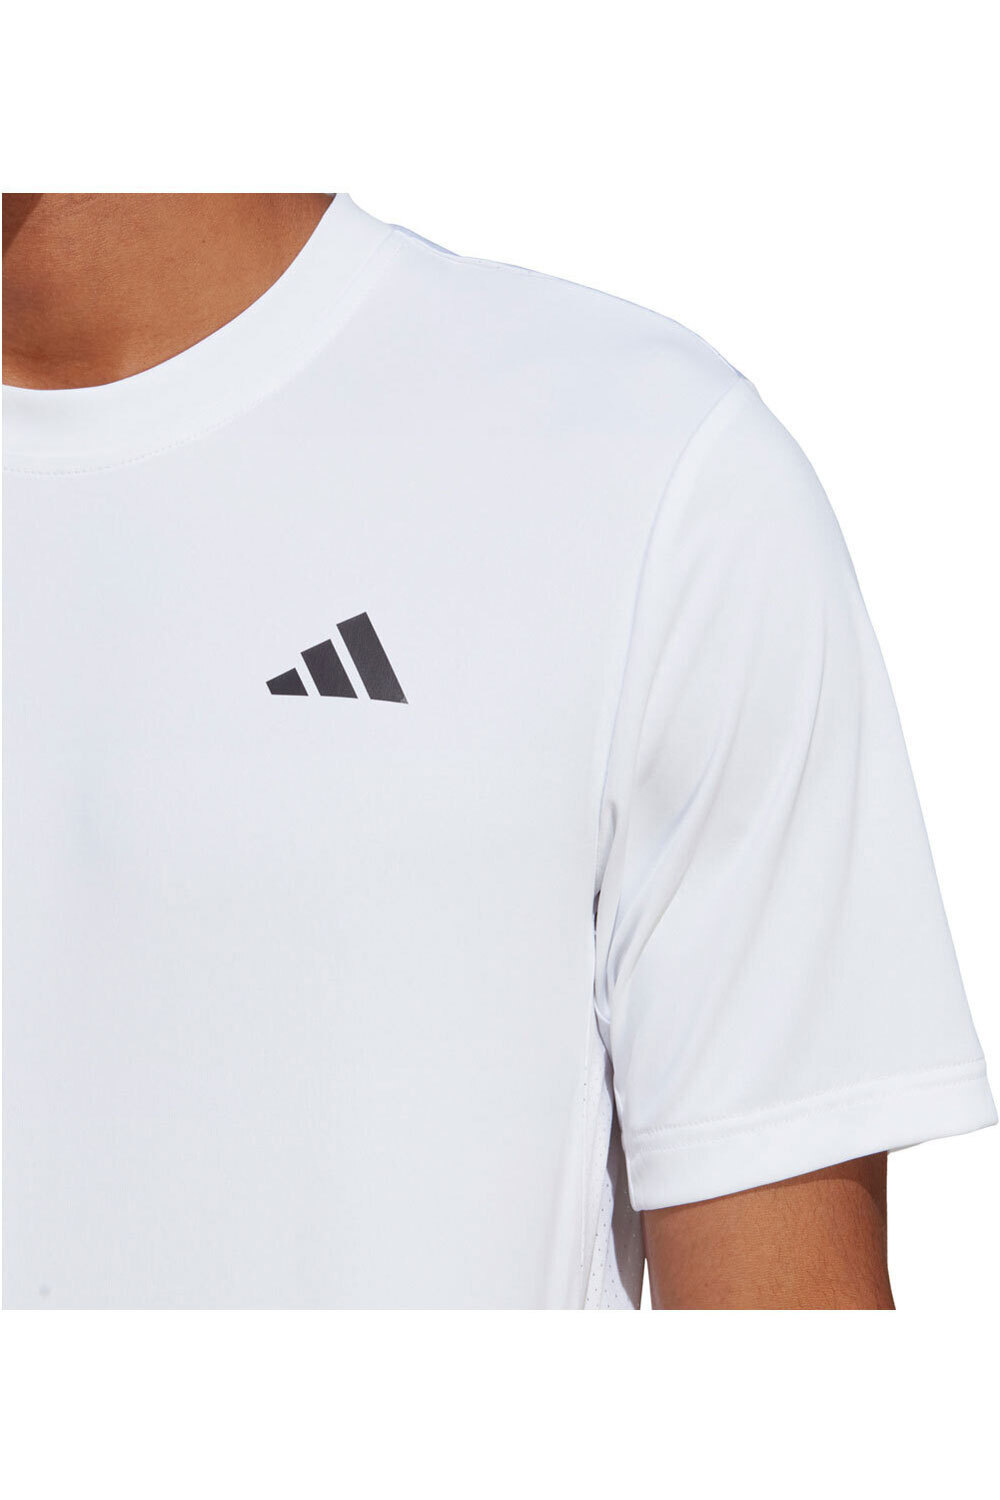 adidas camiseta tenis manga corta hombre Club Tennis vista detalle